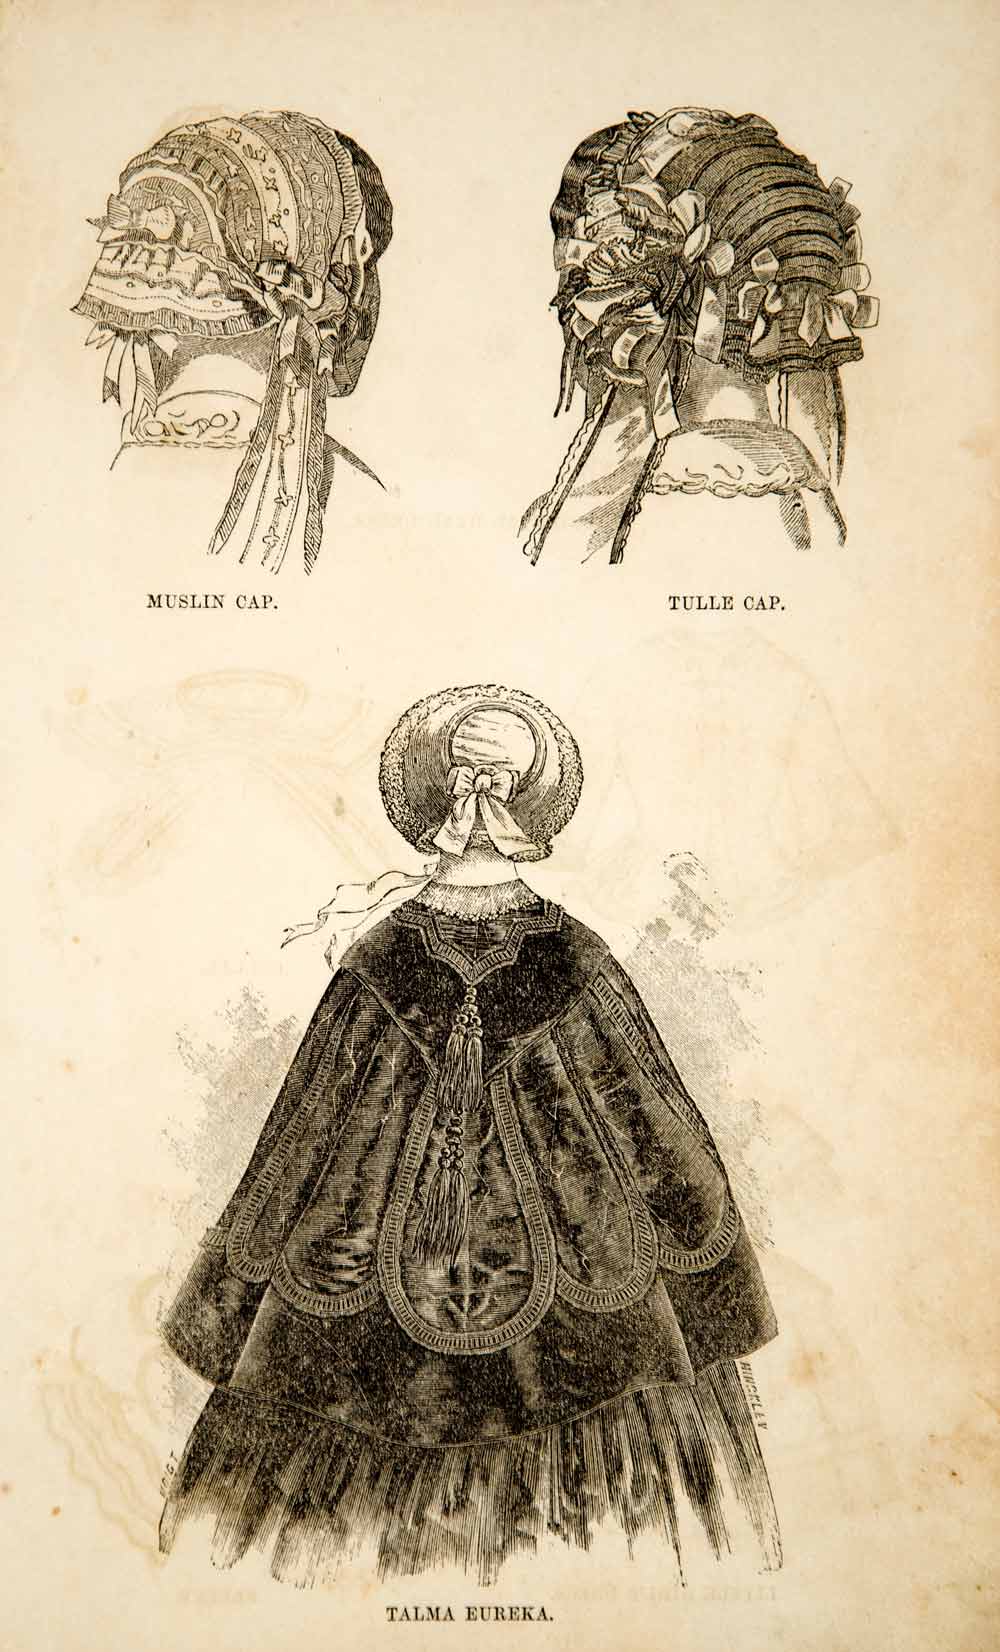 1856 Wood Engraving Victorian Lady Fashion Shawl Muslin Tulle Cap Bonnet YPM2